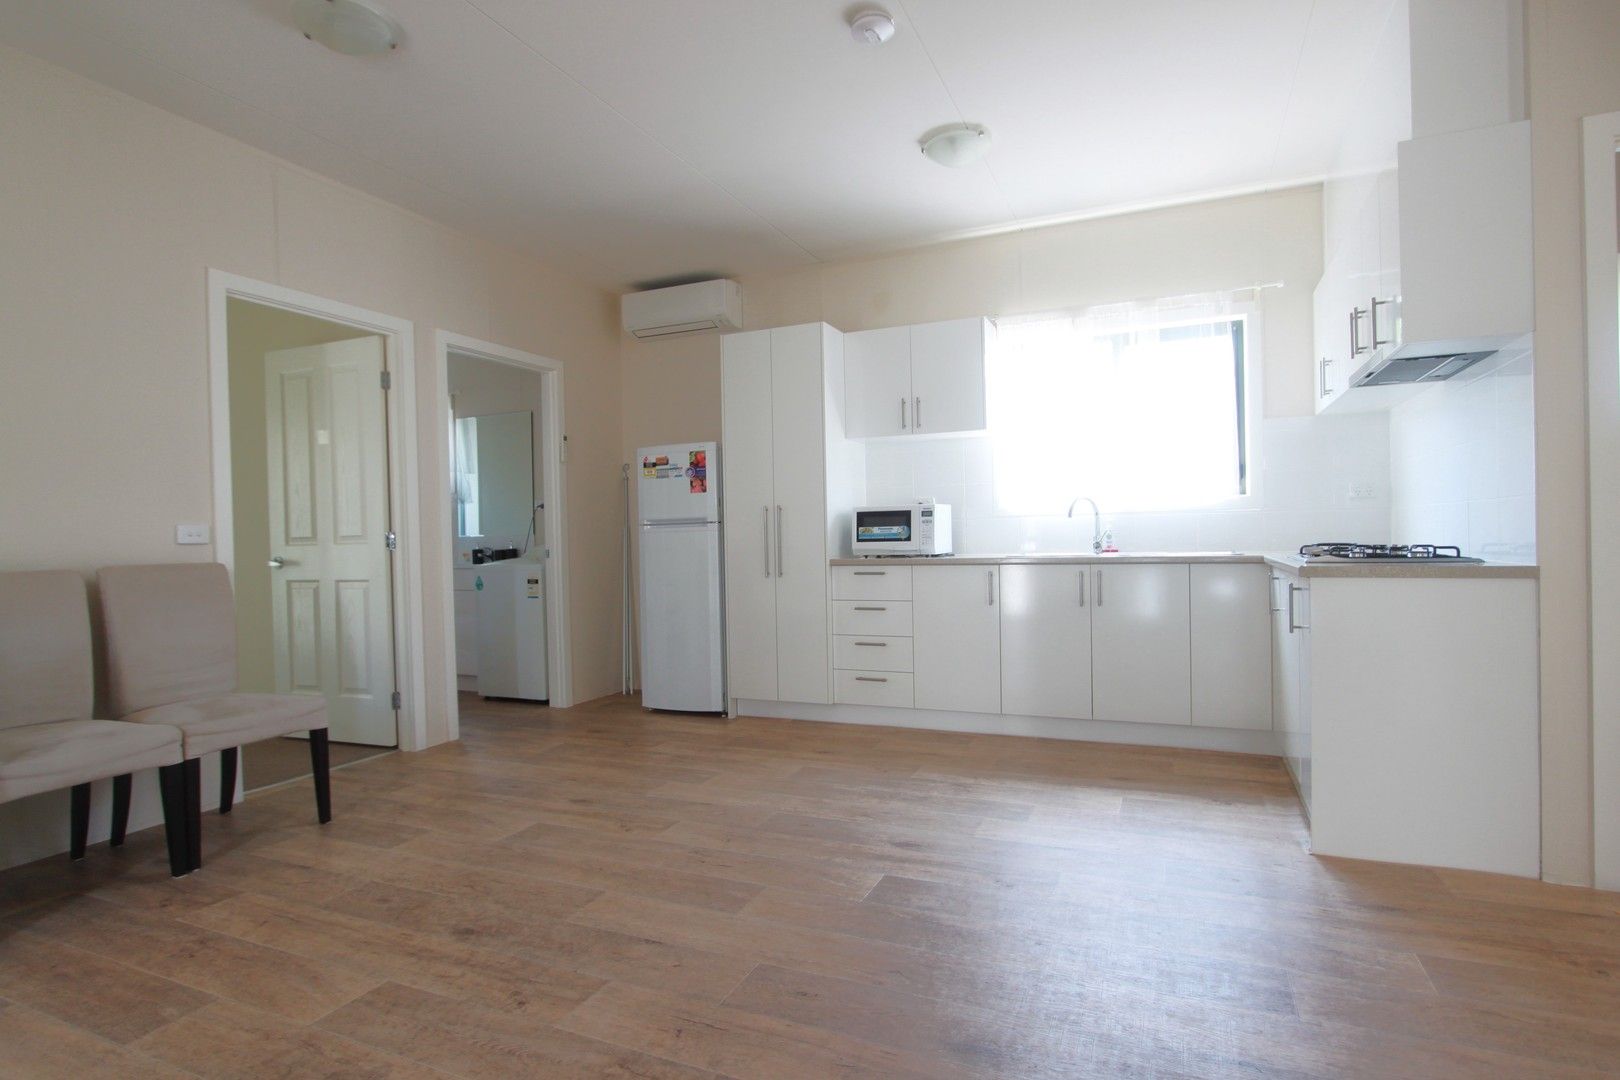 3 bedrooms Apartment / Unit / Flat in 38 (rear unit) Glengarry Avenue BURWOOD VIC, 3125